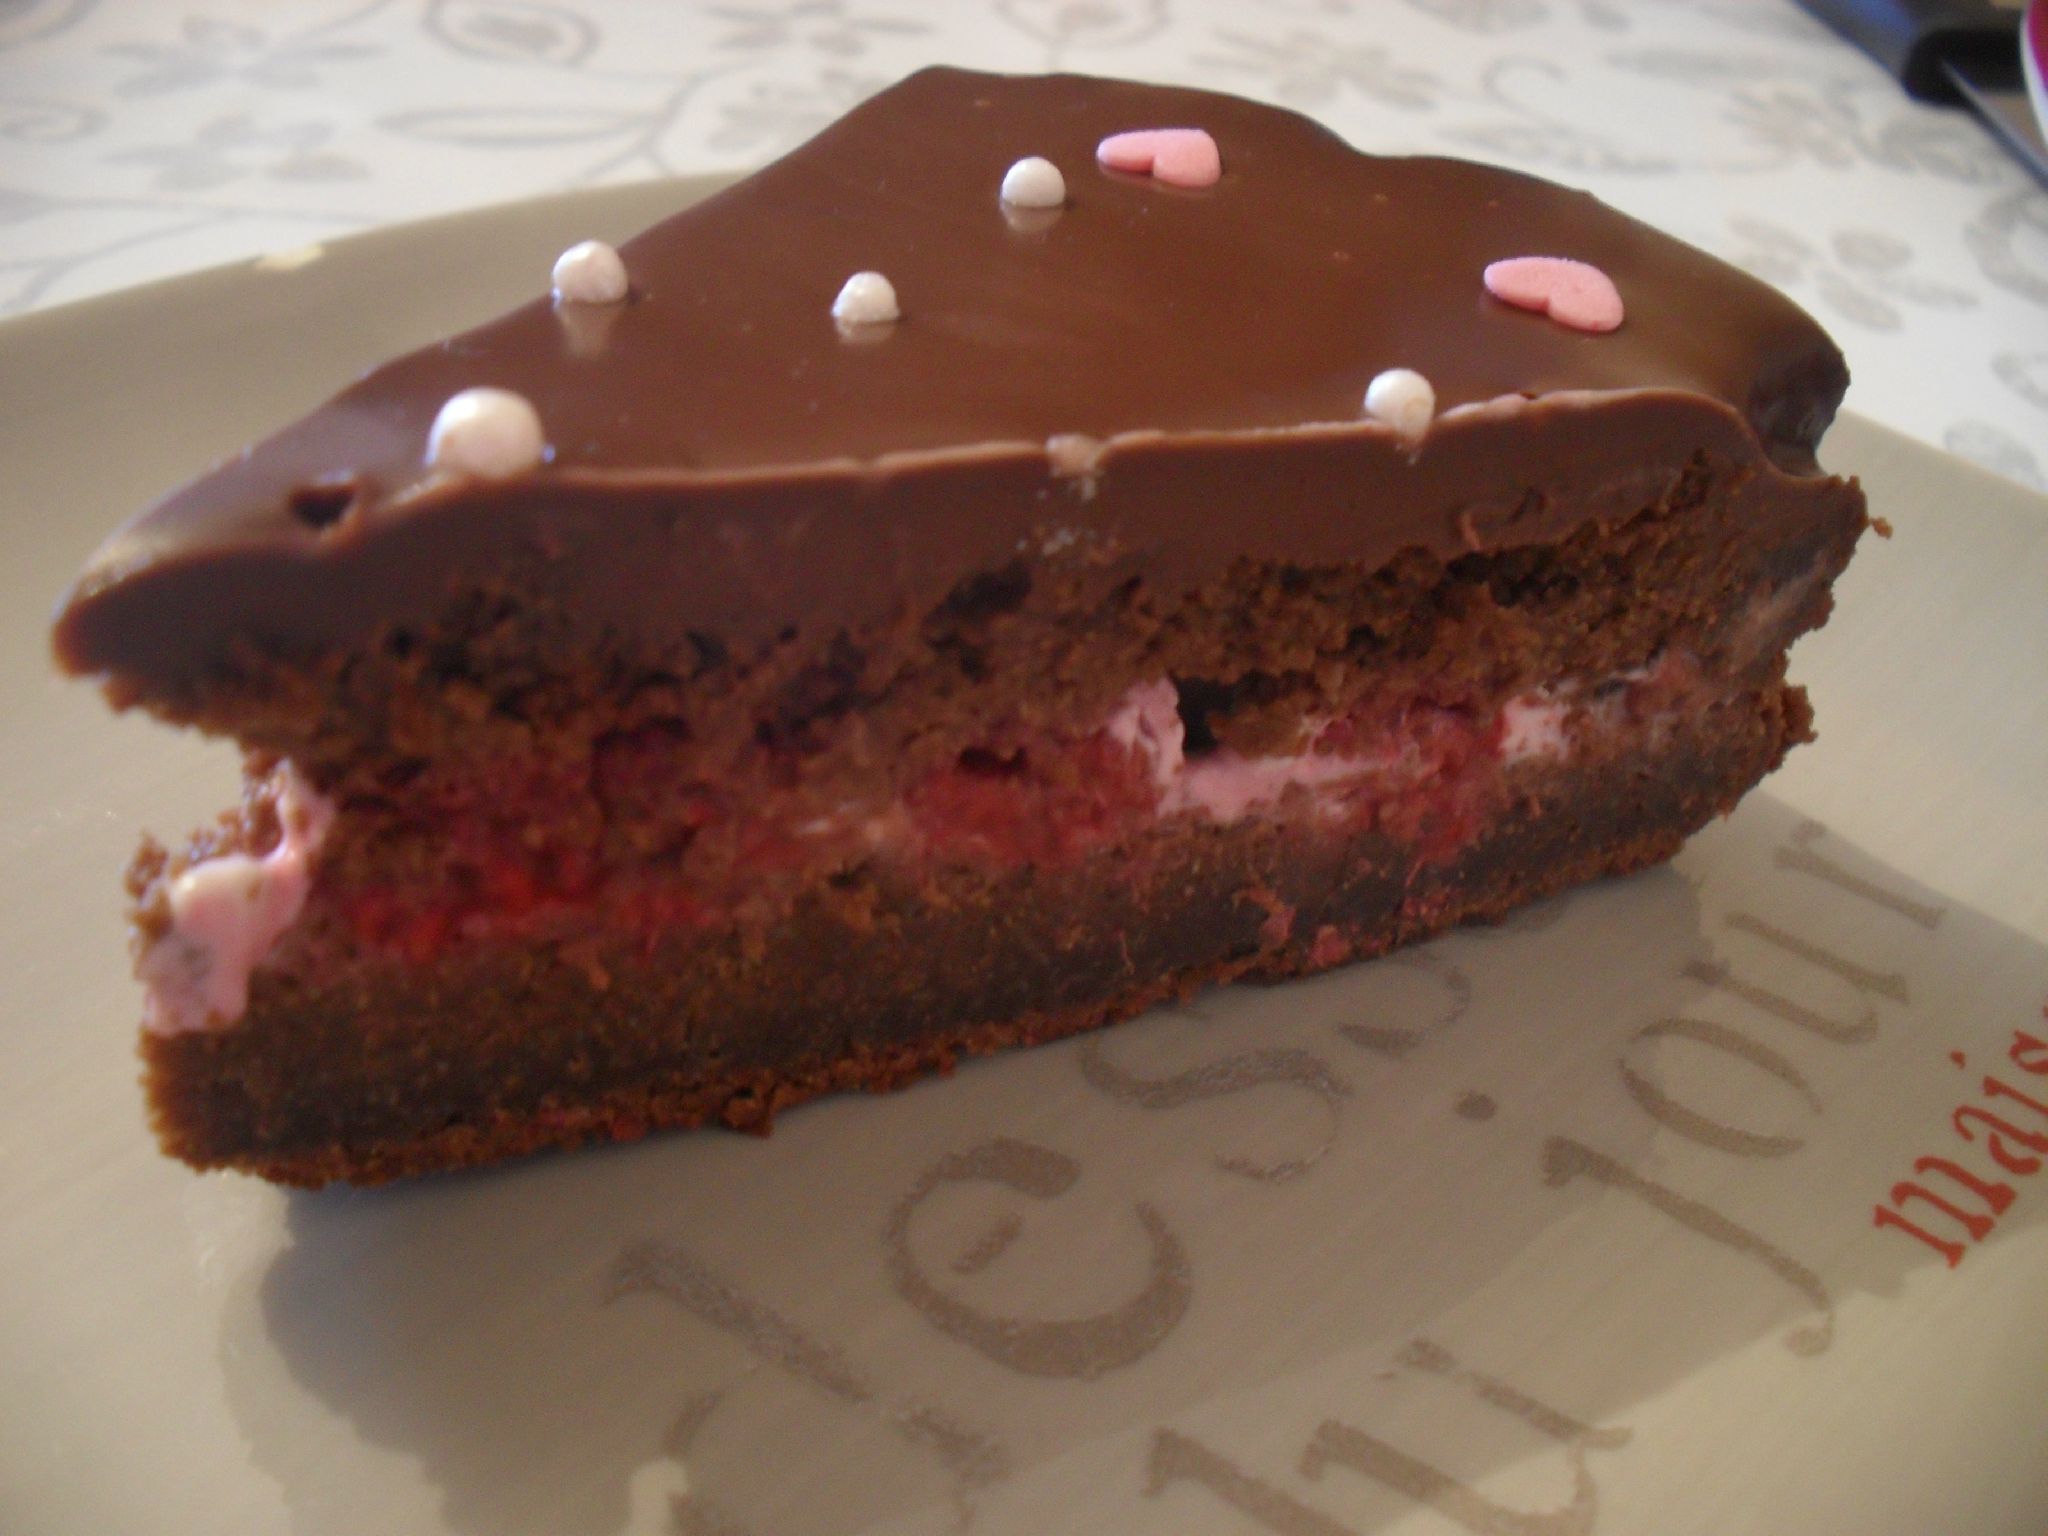 gateau anniversaire chocolat framboise - Recettes de gâteau au chocolat et framboises Les recettes 